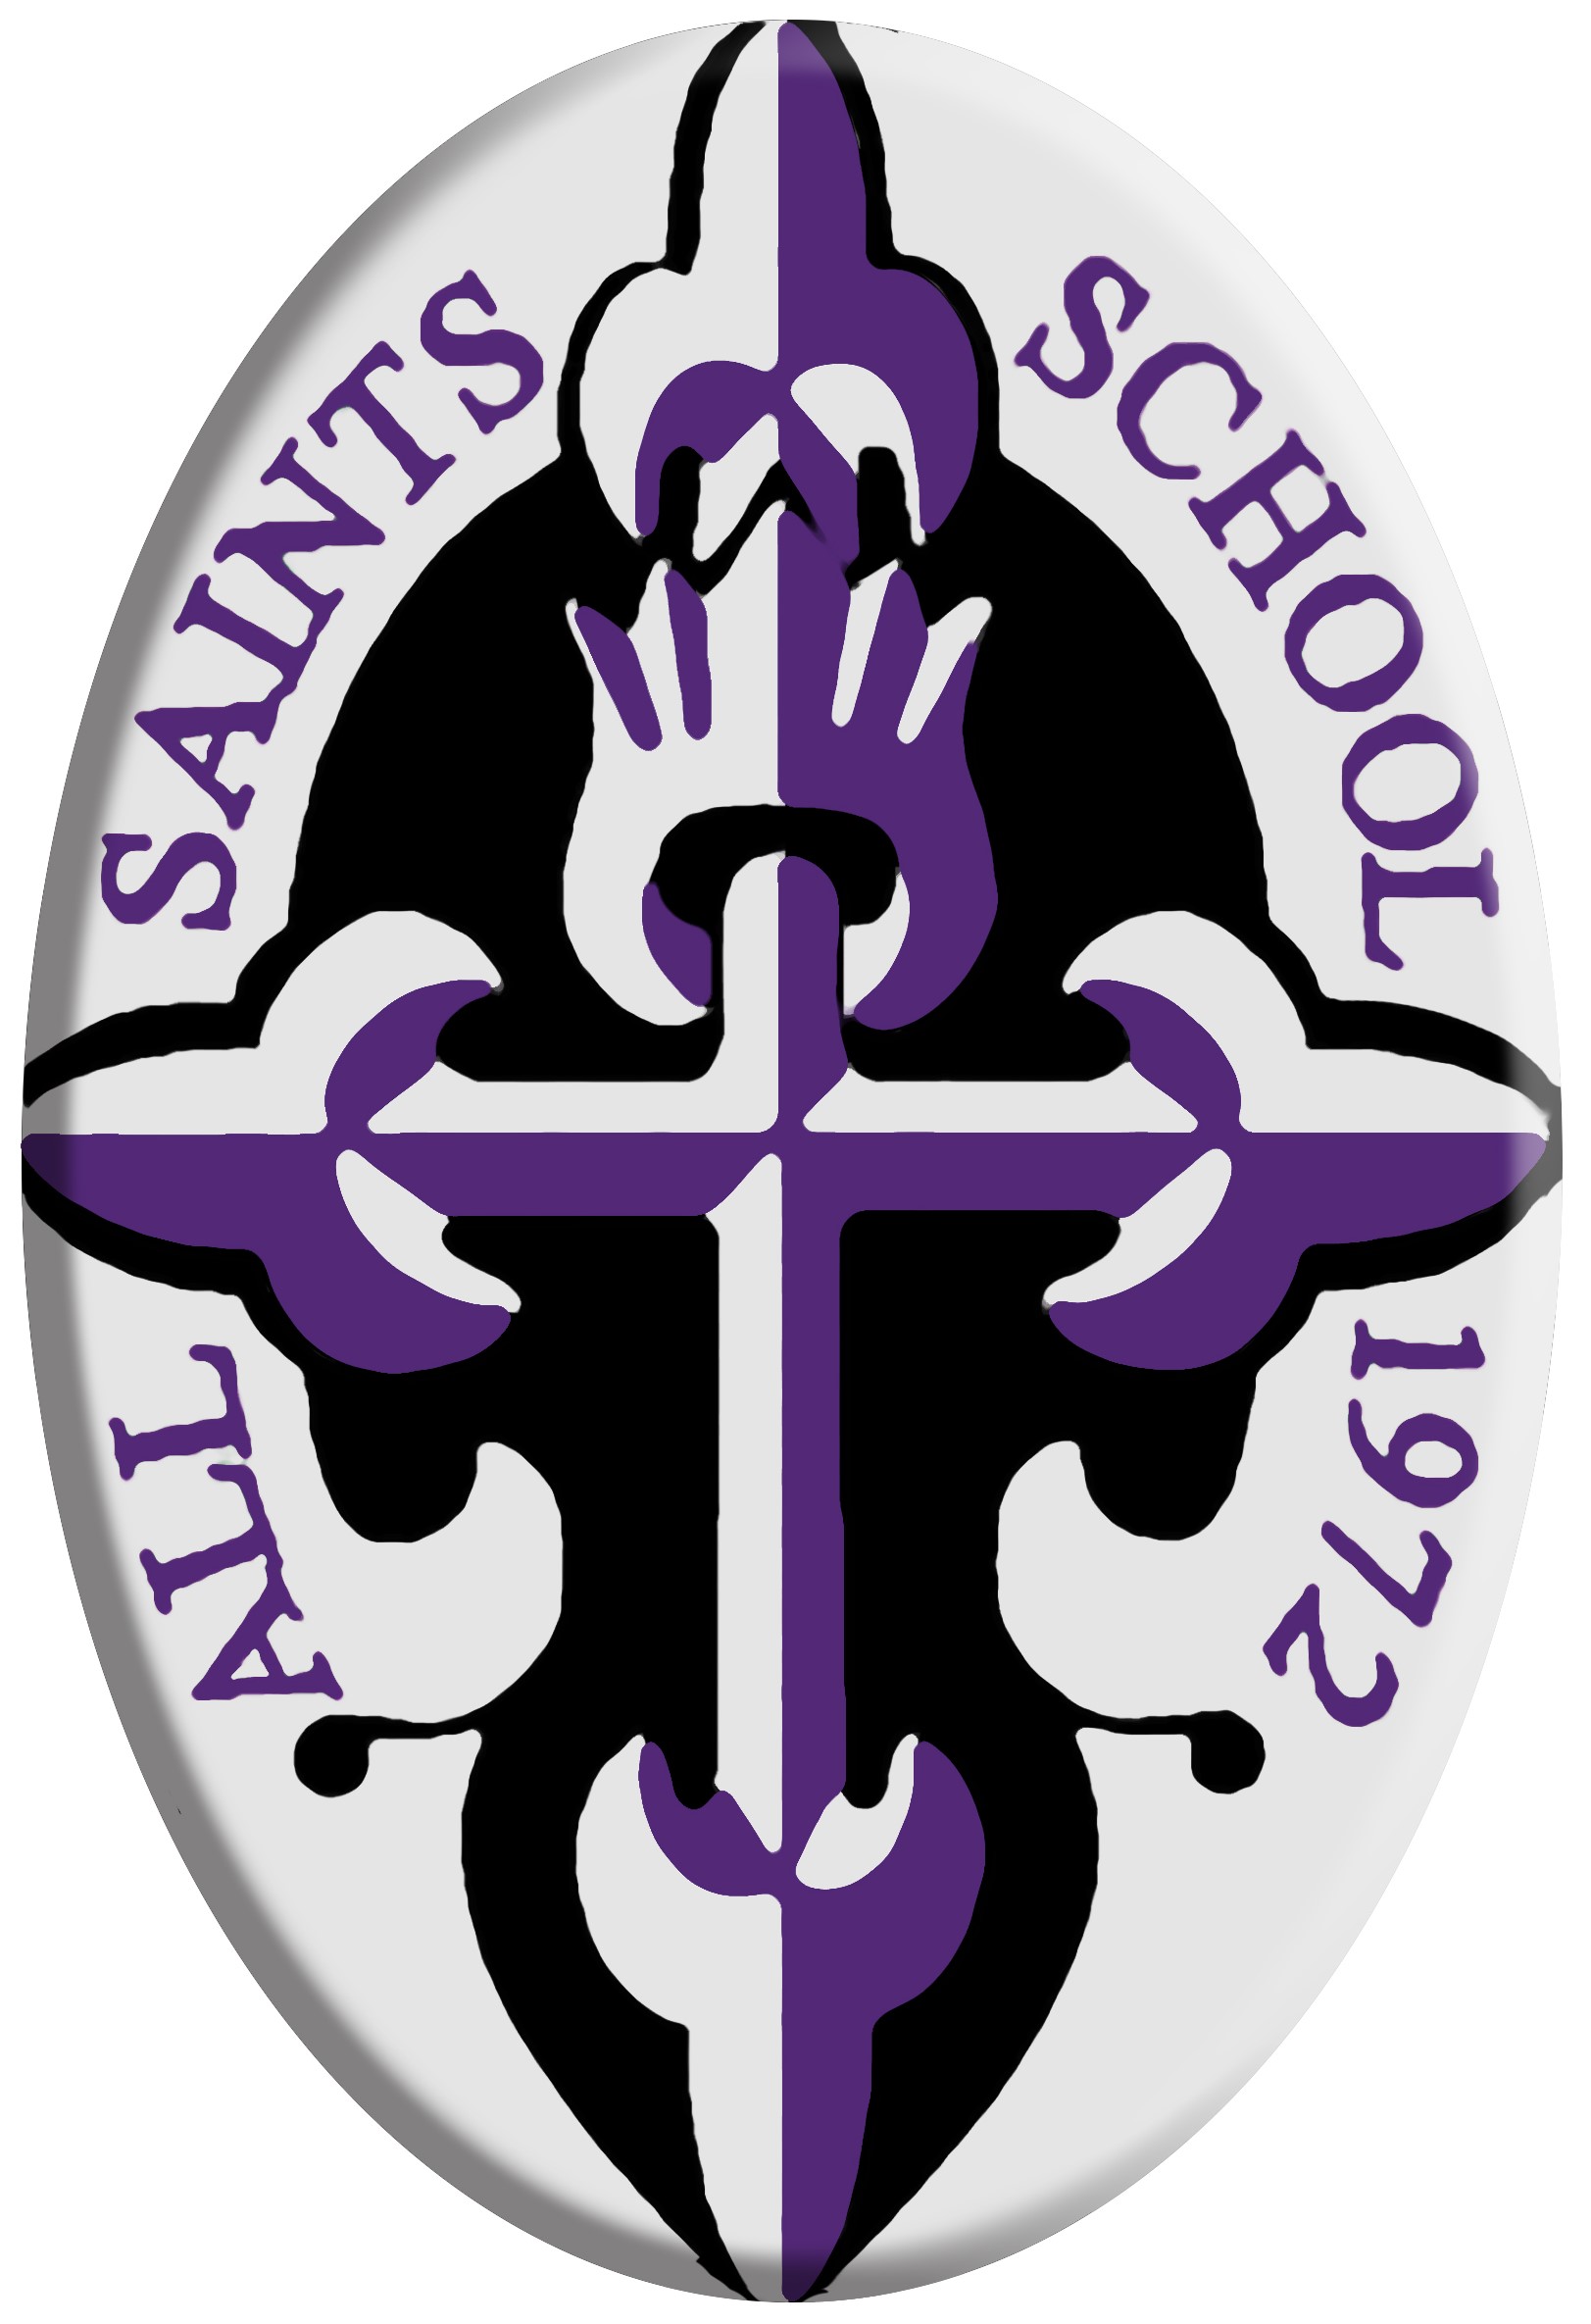 All Saints Secondary School